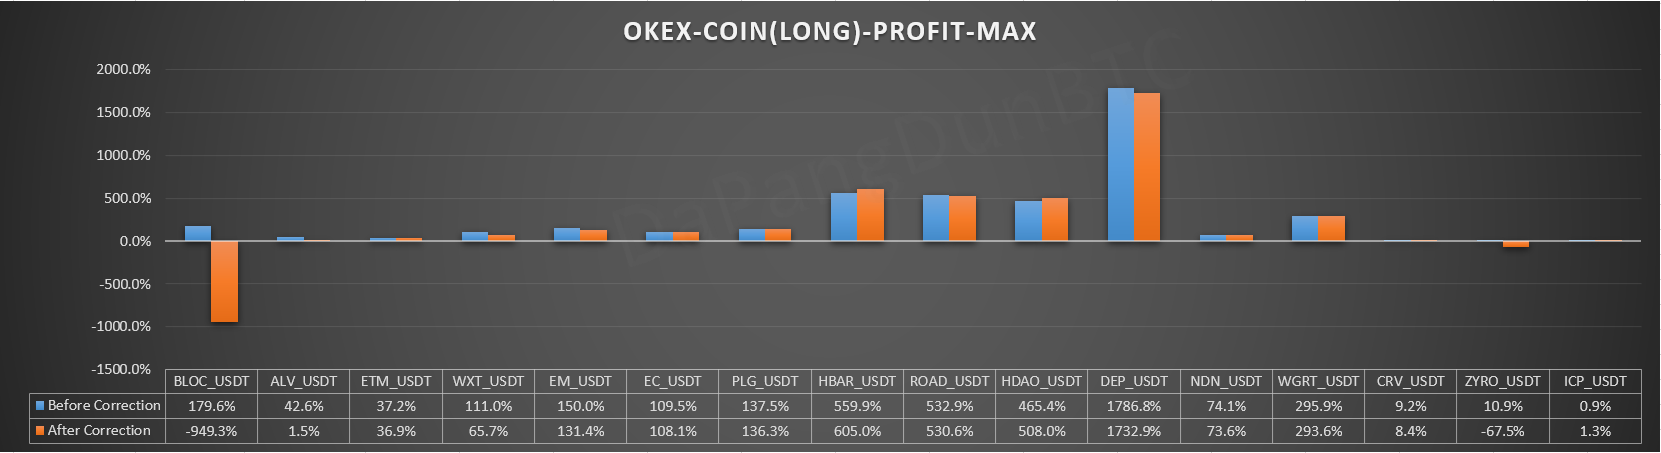 OKEX IEO币种最大收益（第一天收盘价基准）